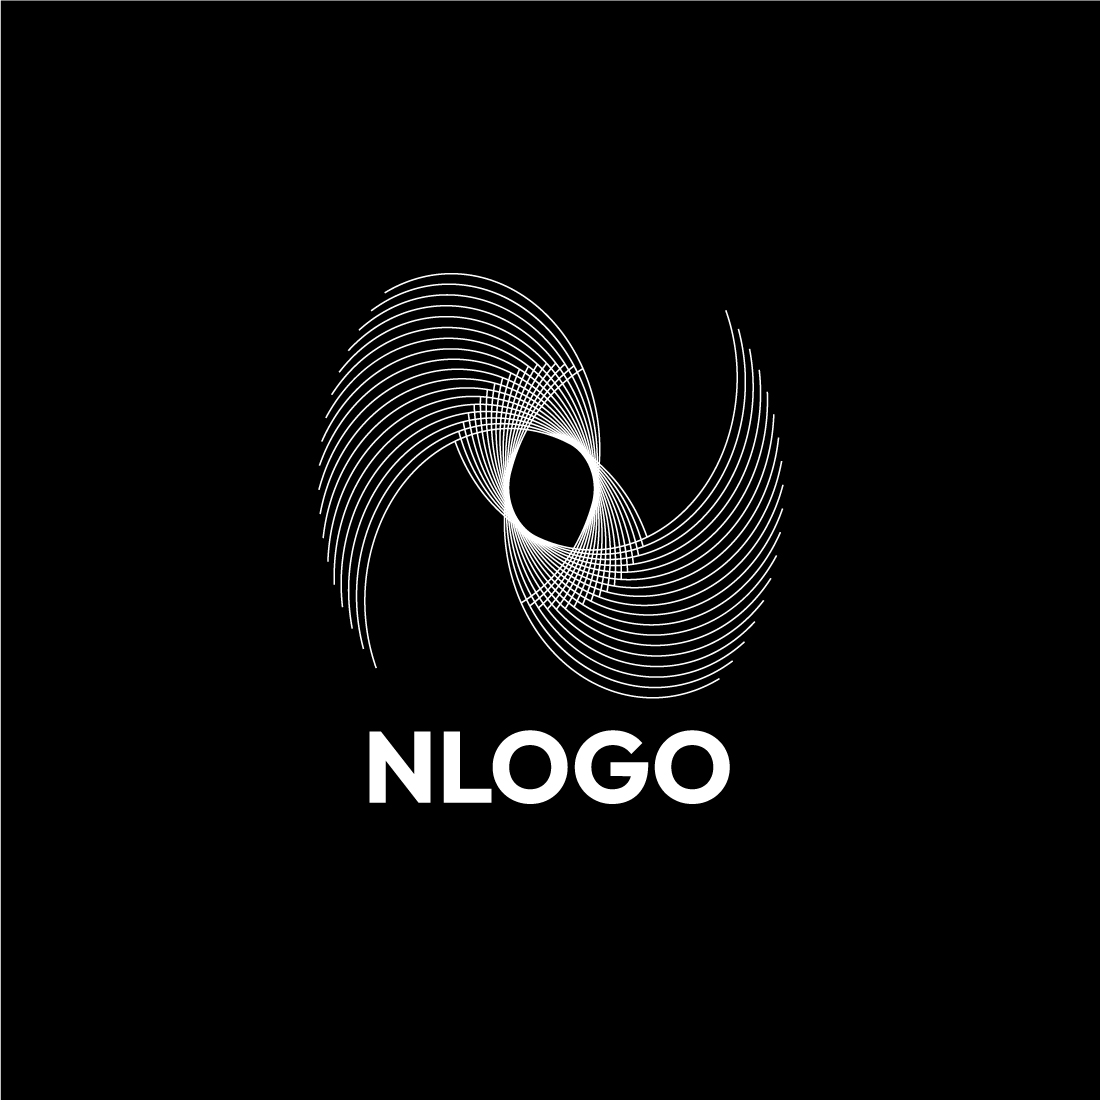 Sleek Line Art Letter N Logo Design - Perfect for Brand Identity! preview image.